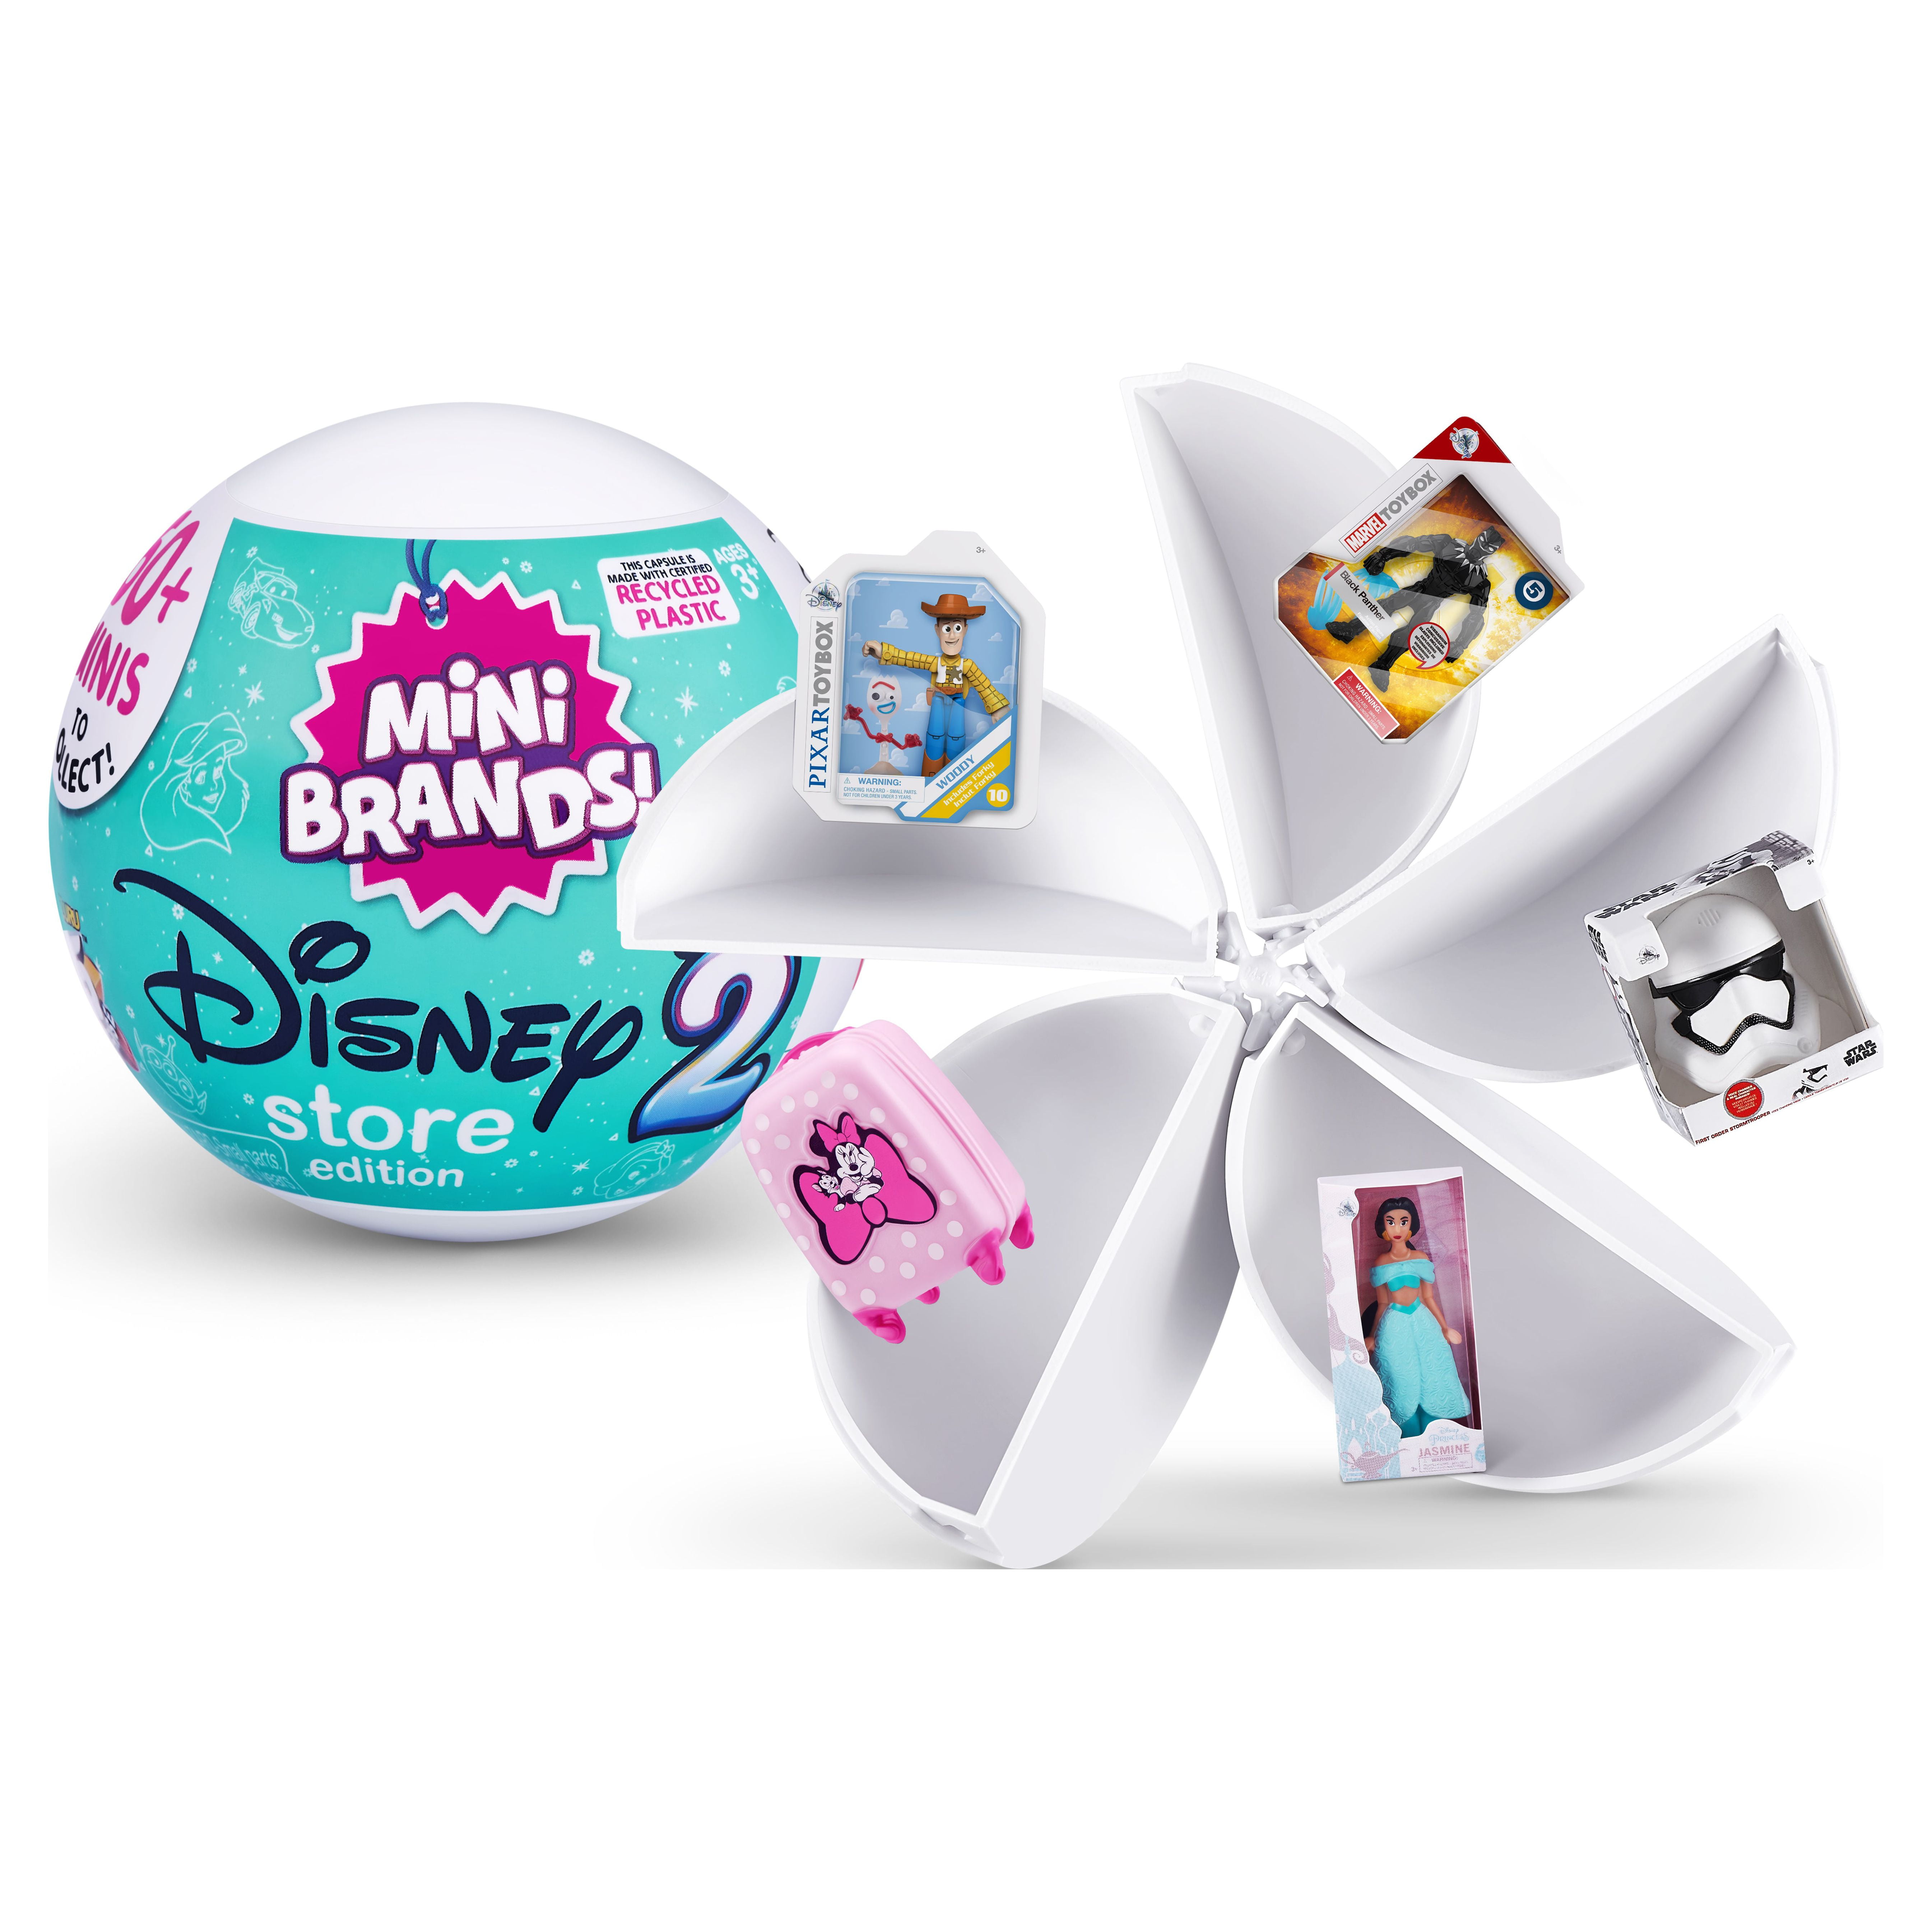 ZURU 5 SURPRISE - Disney Store Edition Mini Brands SERIES 2 NEW WOODY CHEWY  GOLD